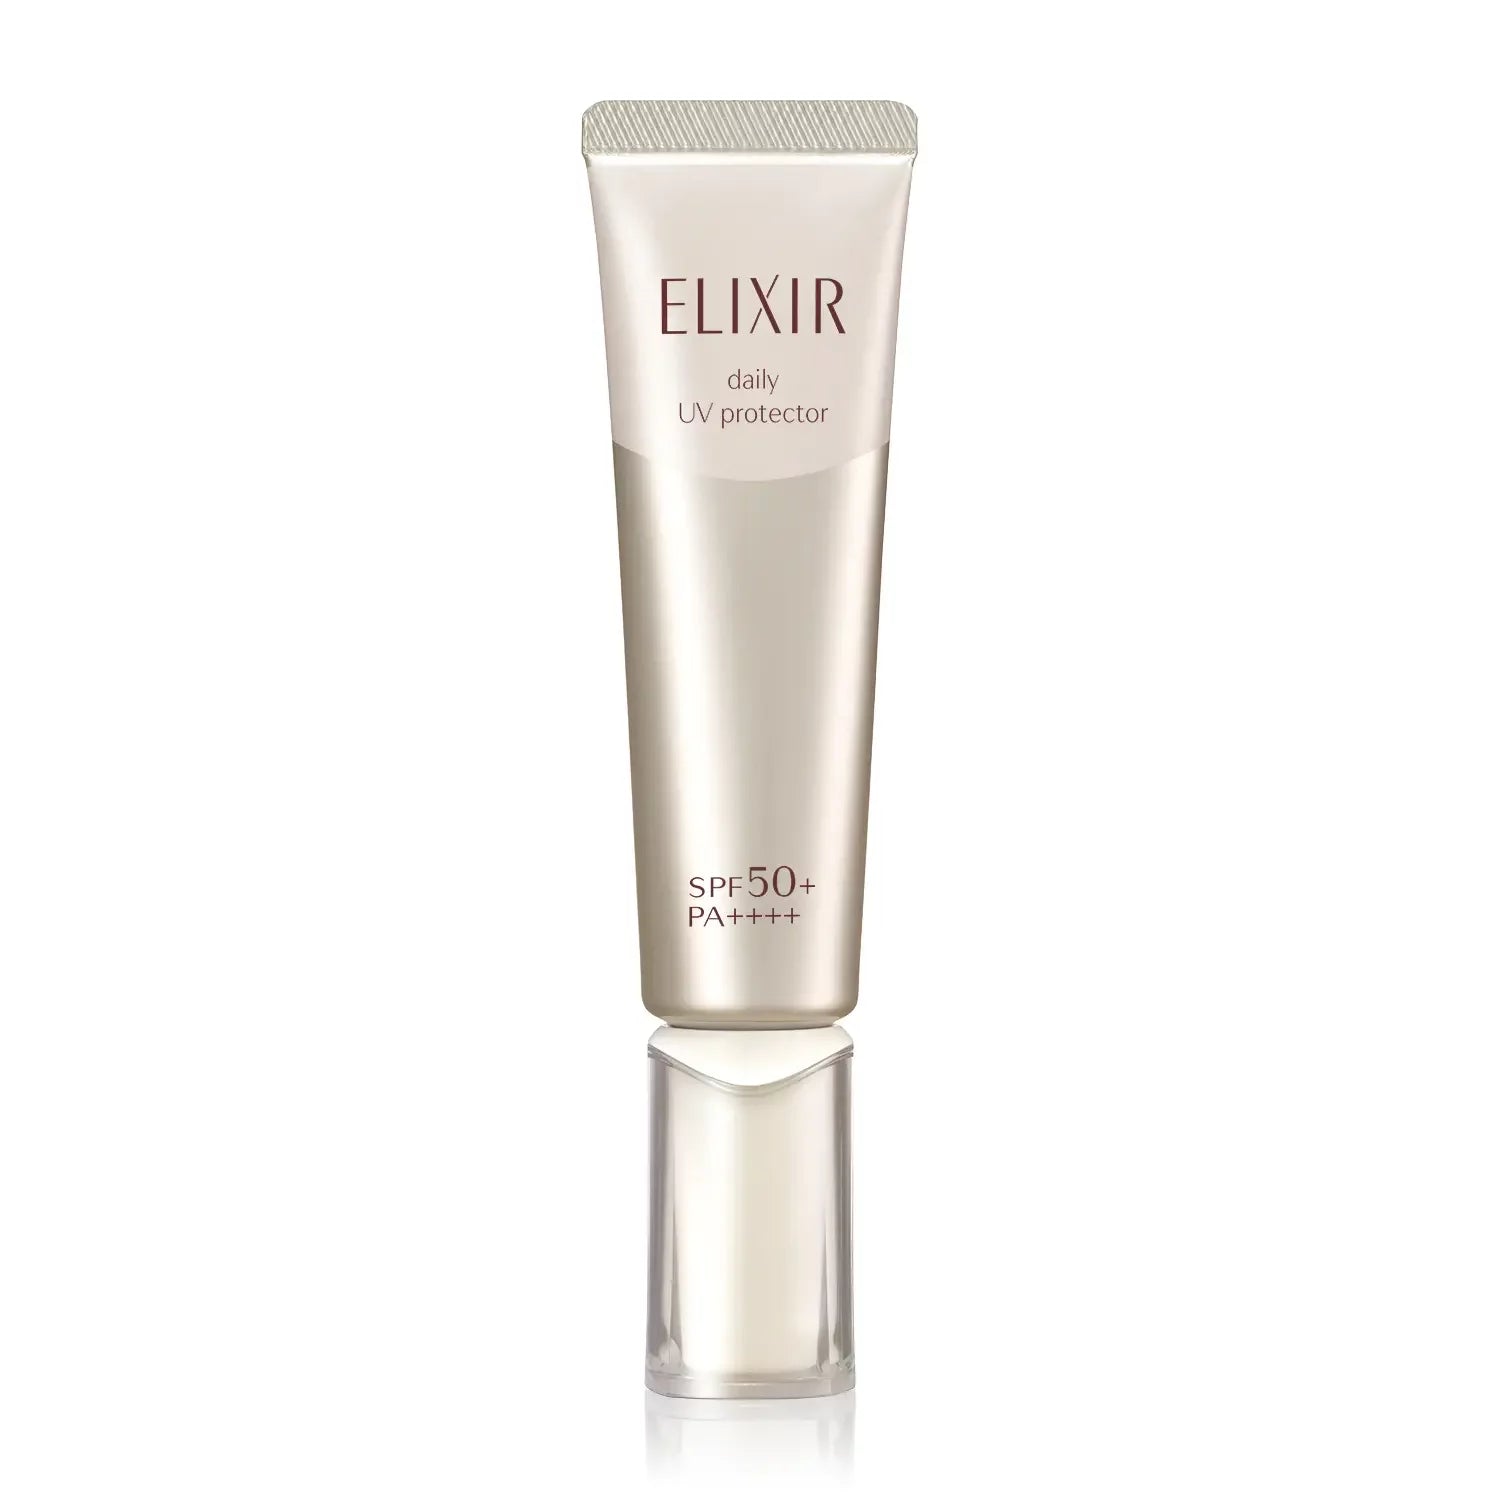 Shiseido Elixir Aging Care Serum Multifunctional Daily UV Protector SPF 50+ 35ml